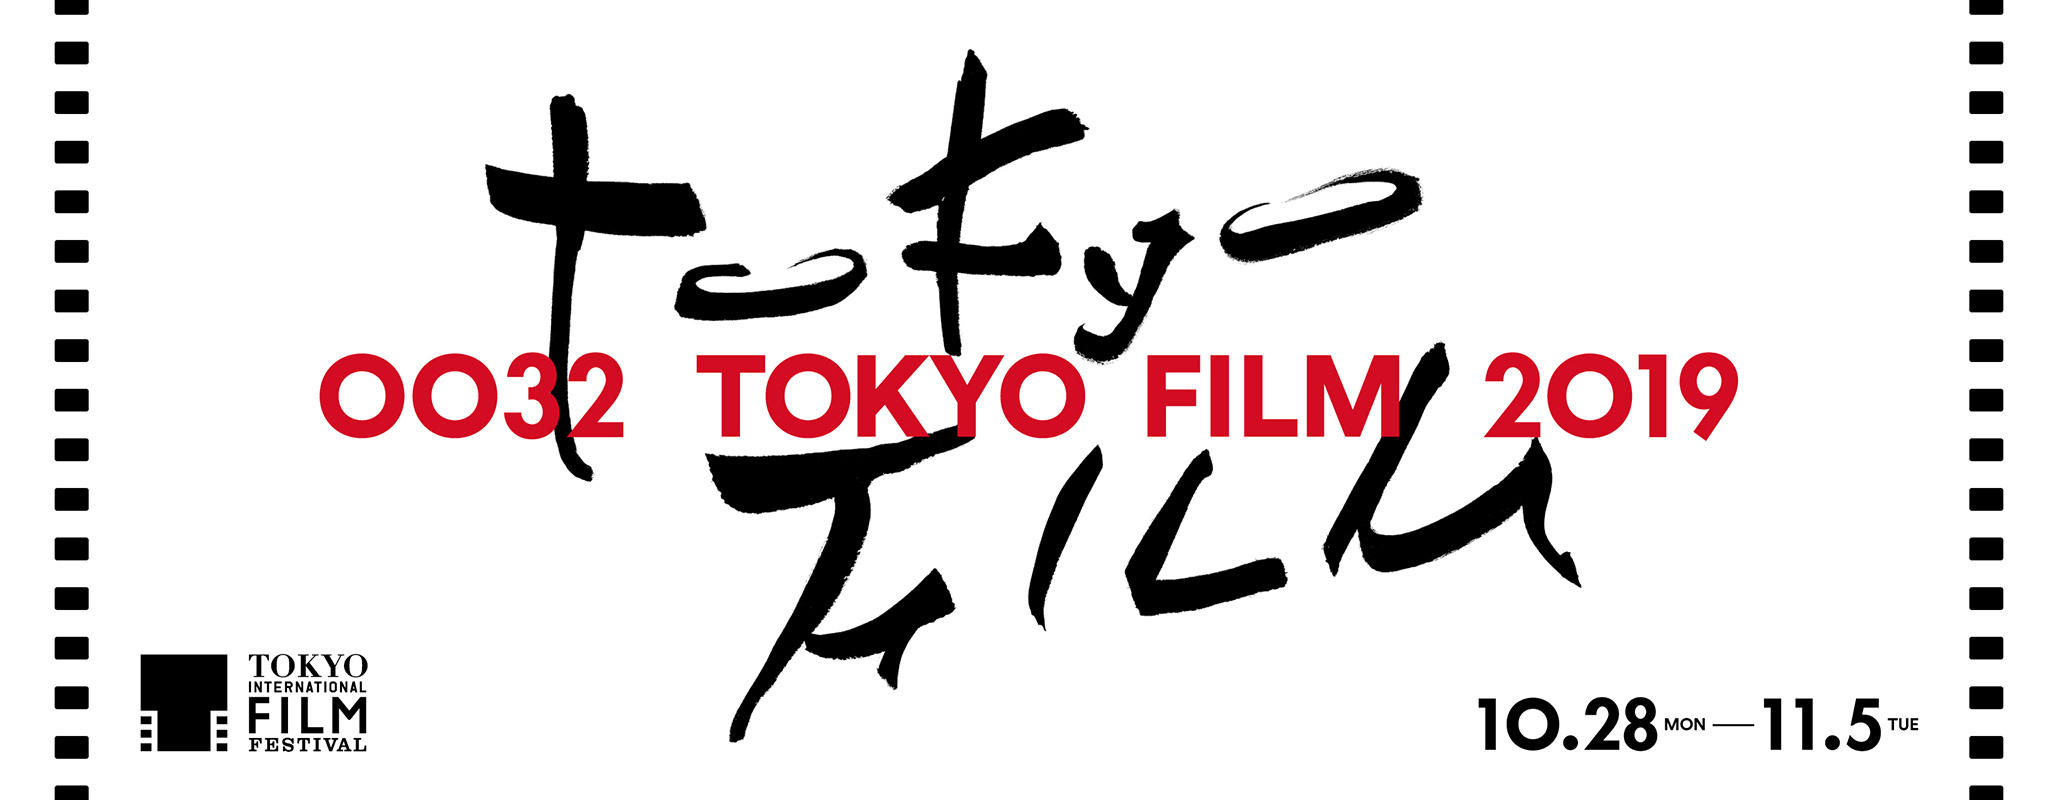 0032 TOKYO FILM 2019